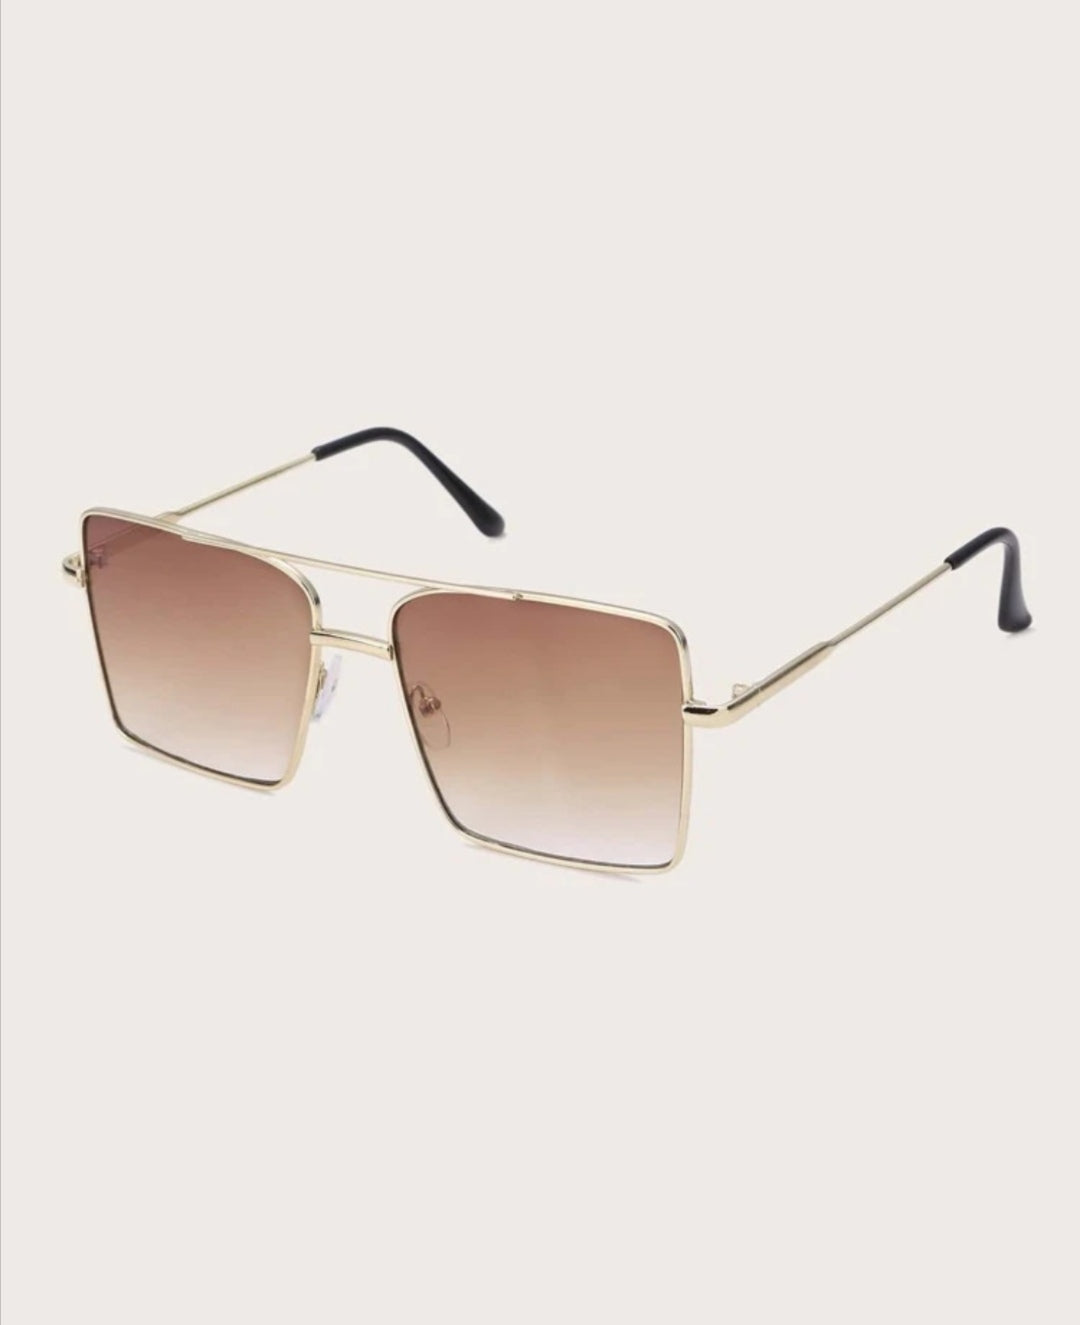 Cancun Square Sunglasses